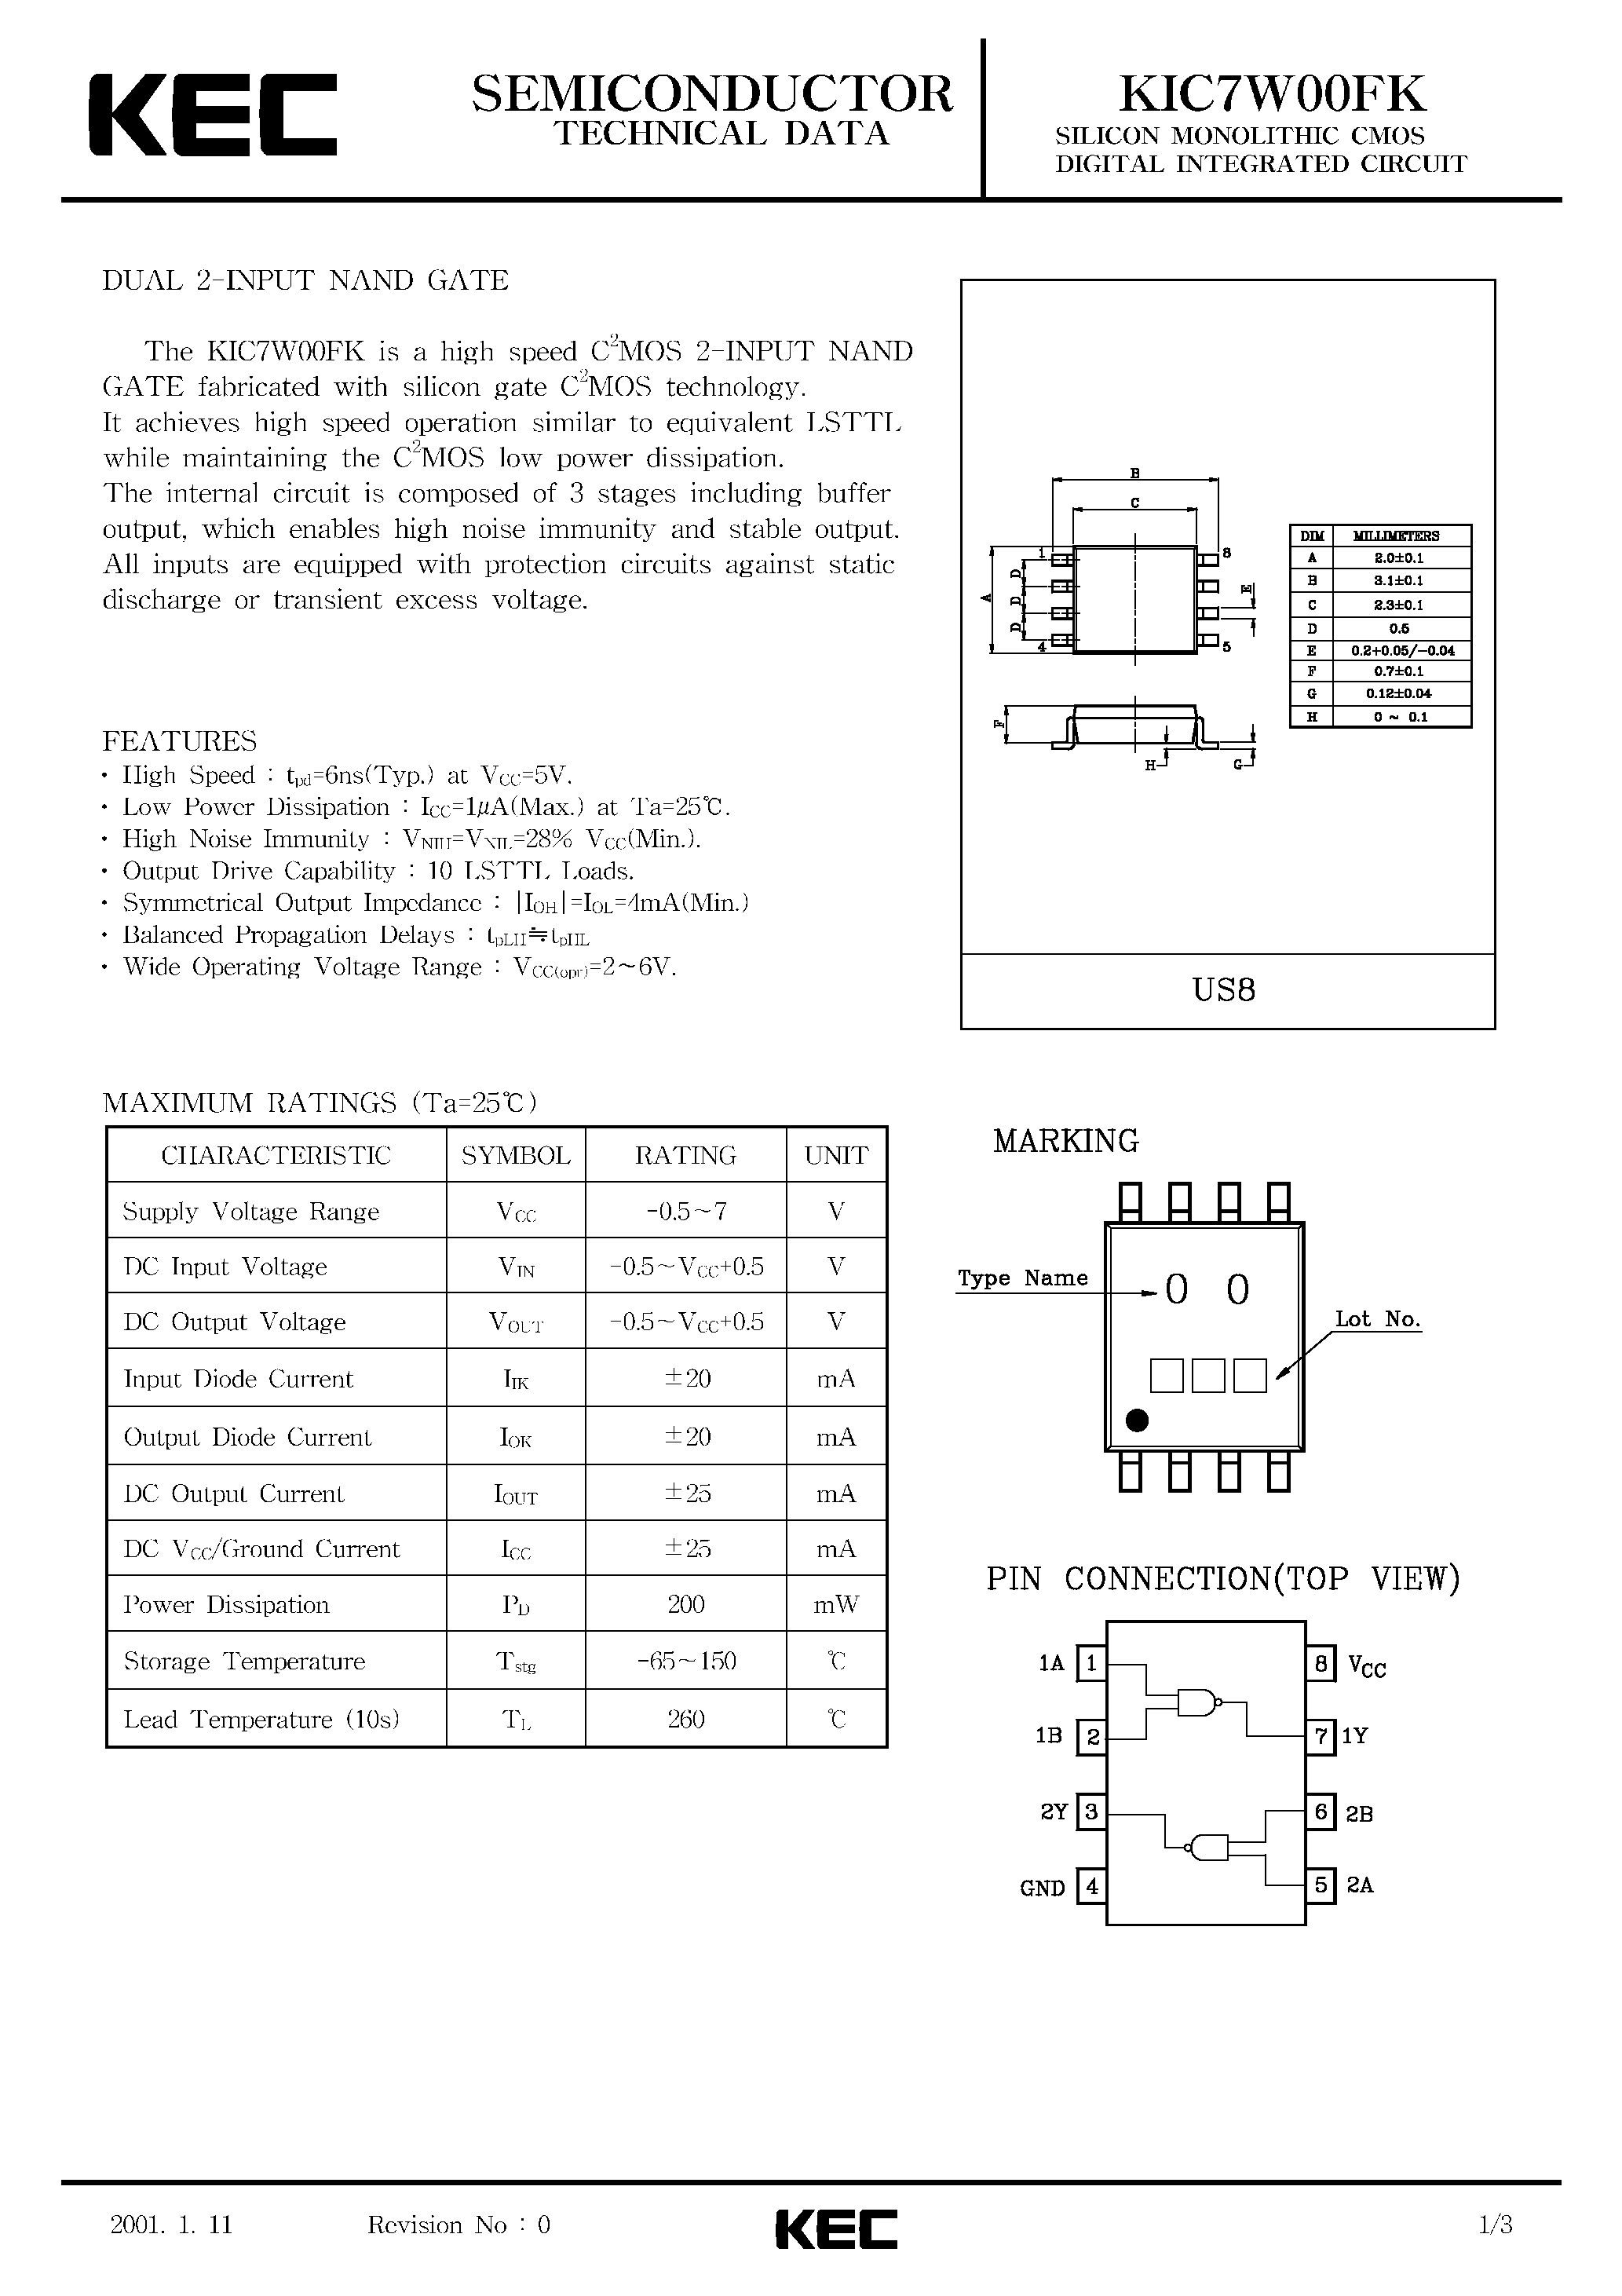 Datasheet KIC7W00FK - SILICON MONOLITHIC CMOS DIGITAL INTEGRATED CIRCUIT(DAUL 2-INPUT NAND GATE) page 1